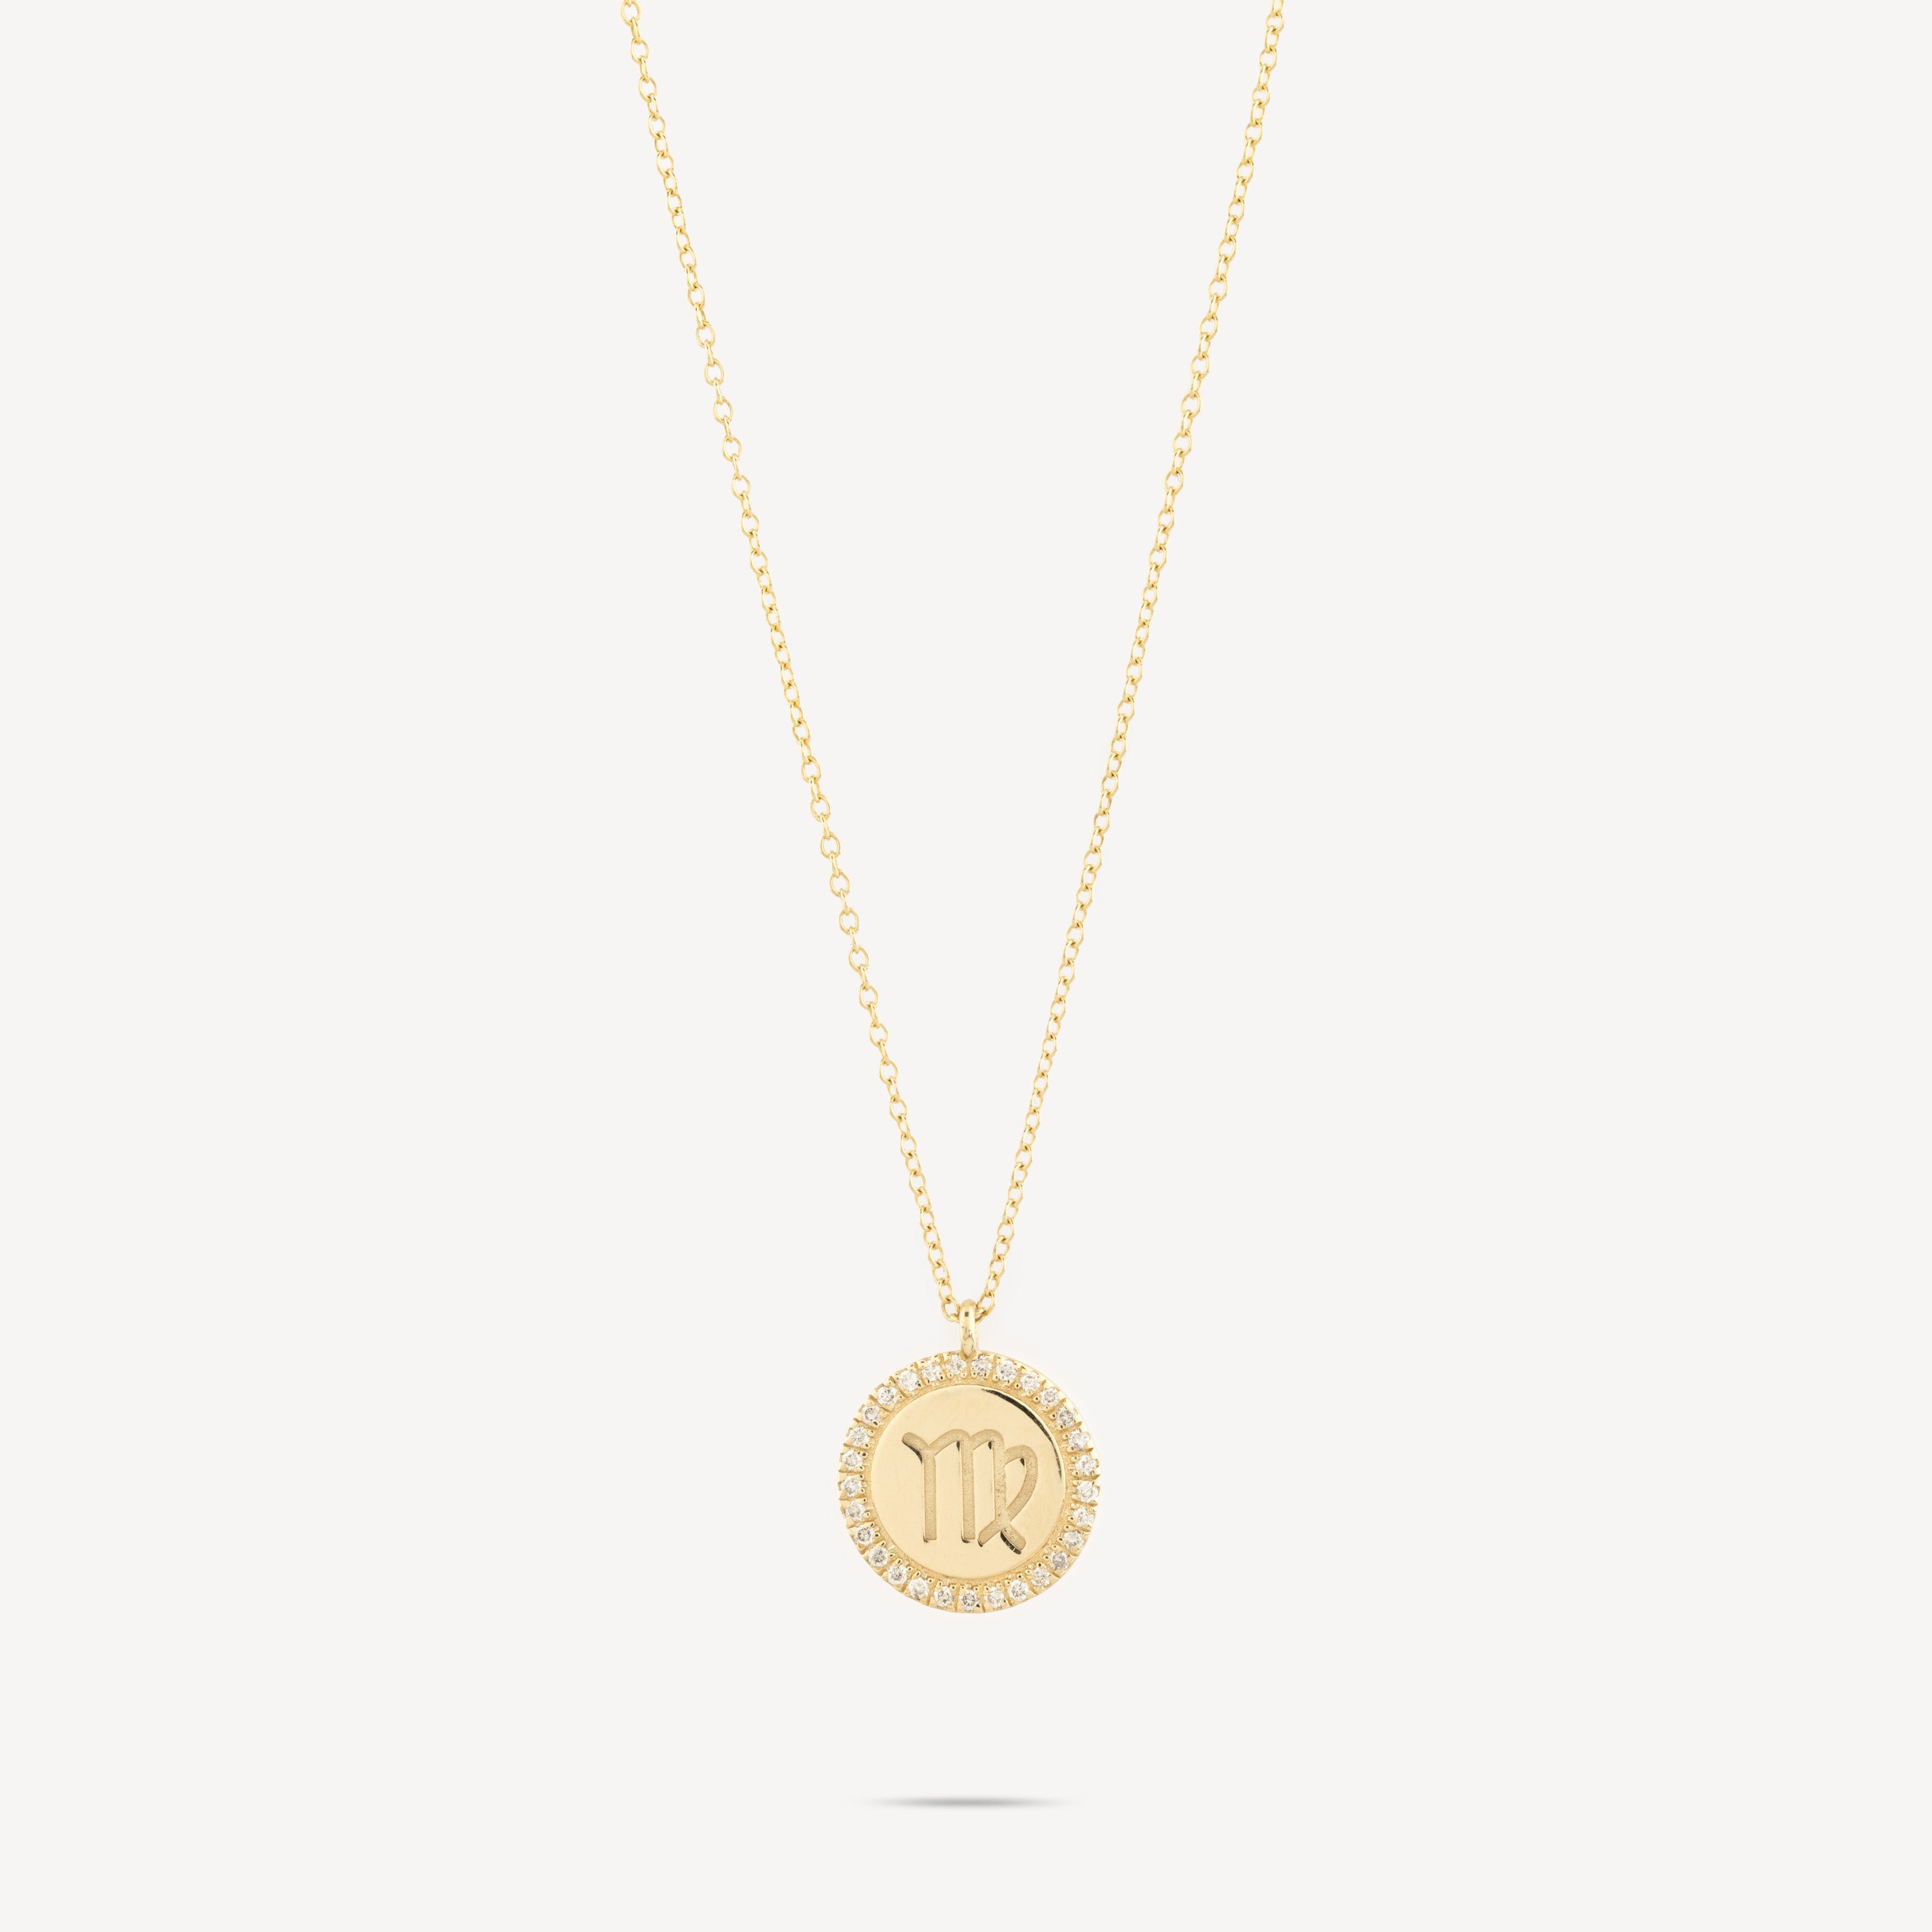 Zodiac Virgo medal necklace with diamonds